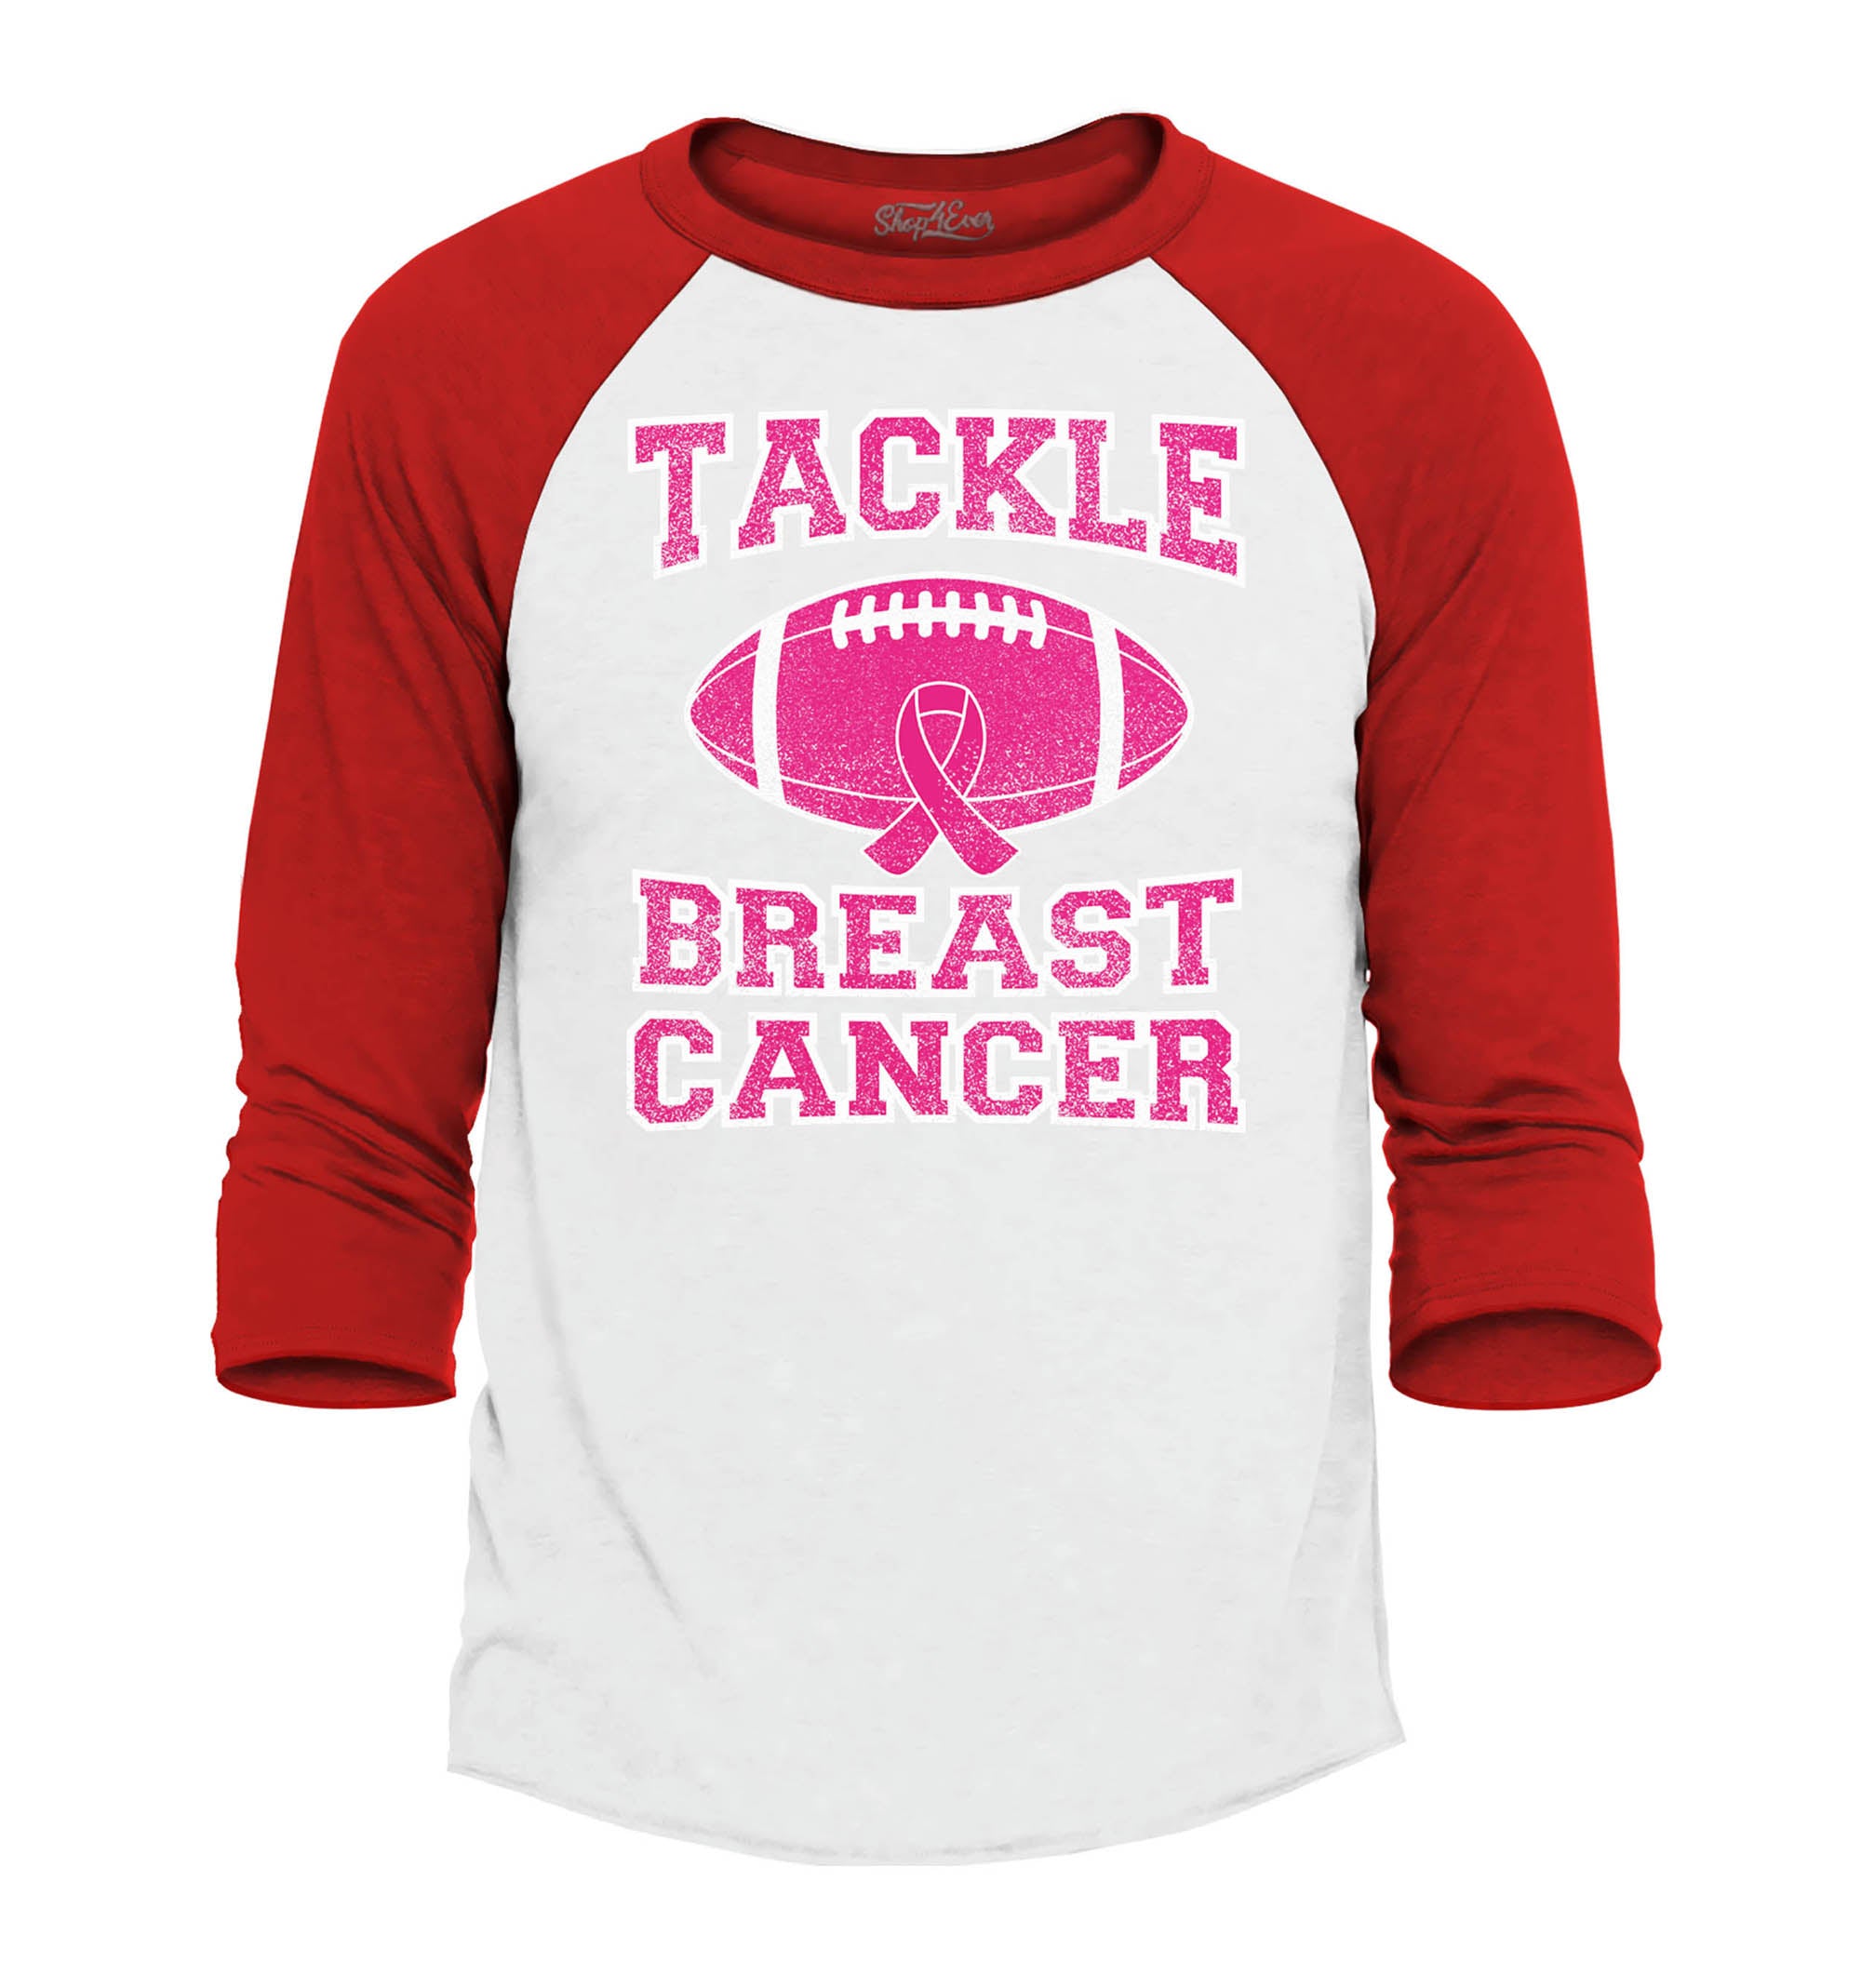 Tackle Breast Cancer Horizontal Football Support Awareness Raglan Baseball Shirt